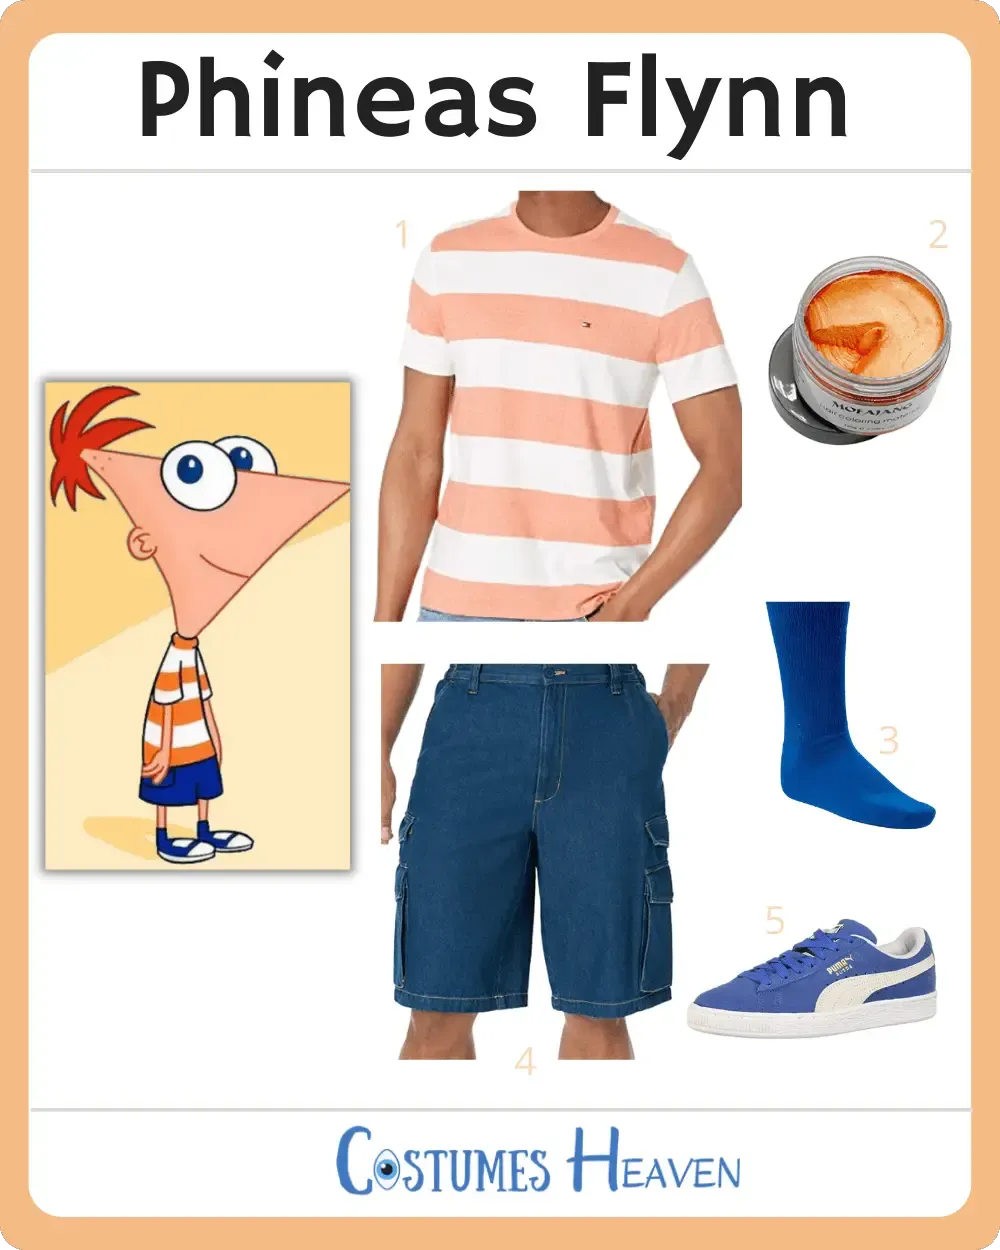 Phineas Flynn costume